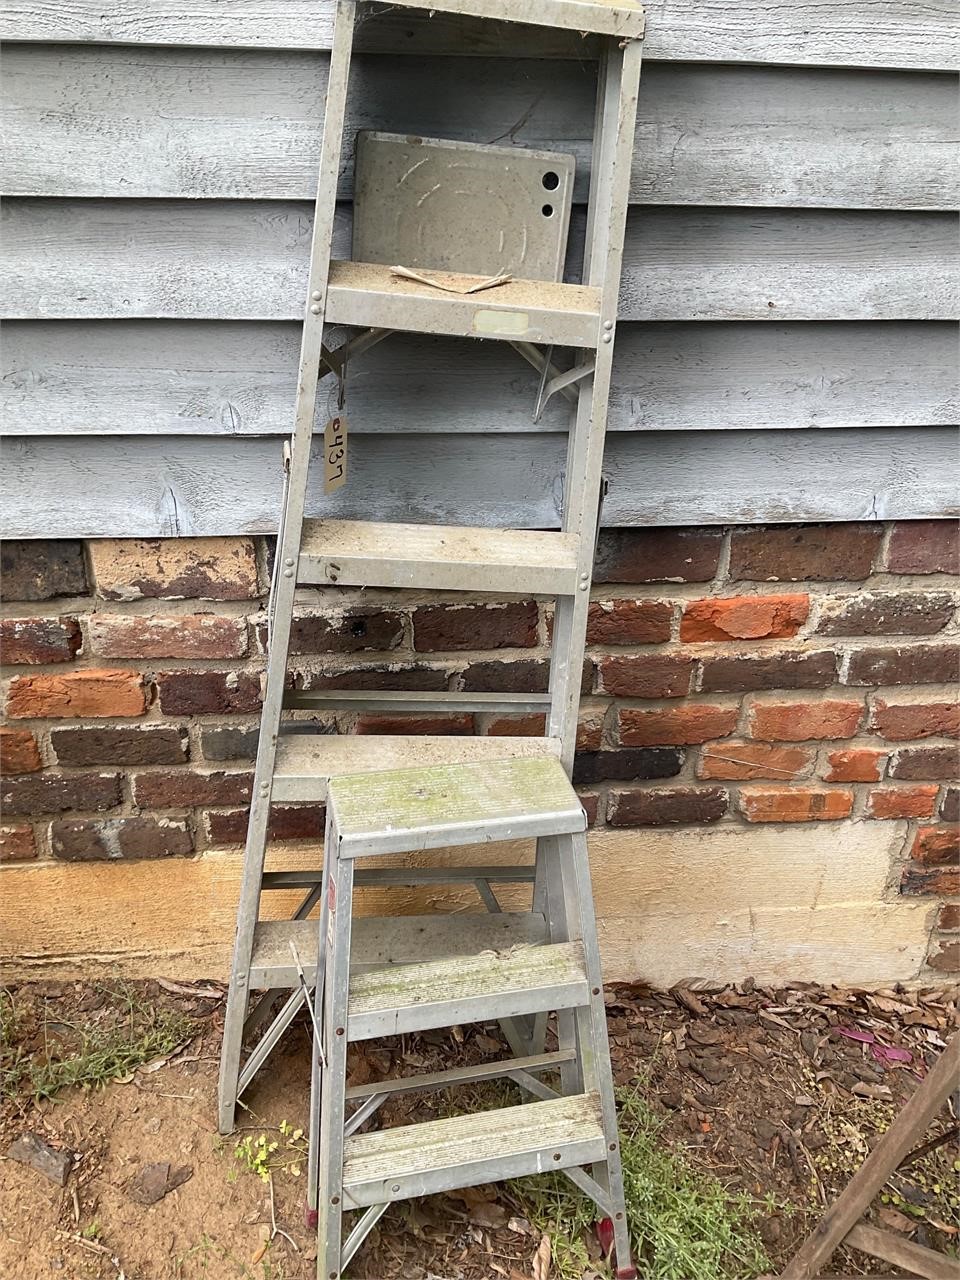 2 ladders